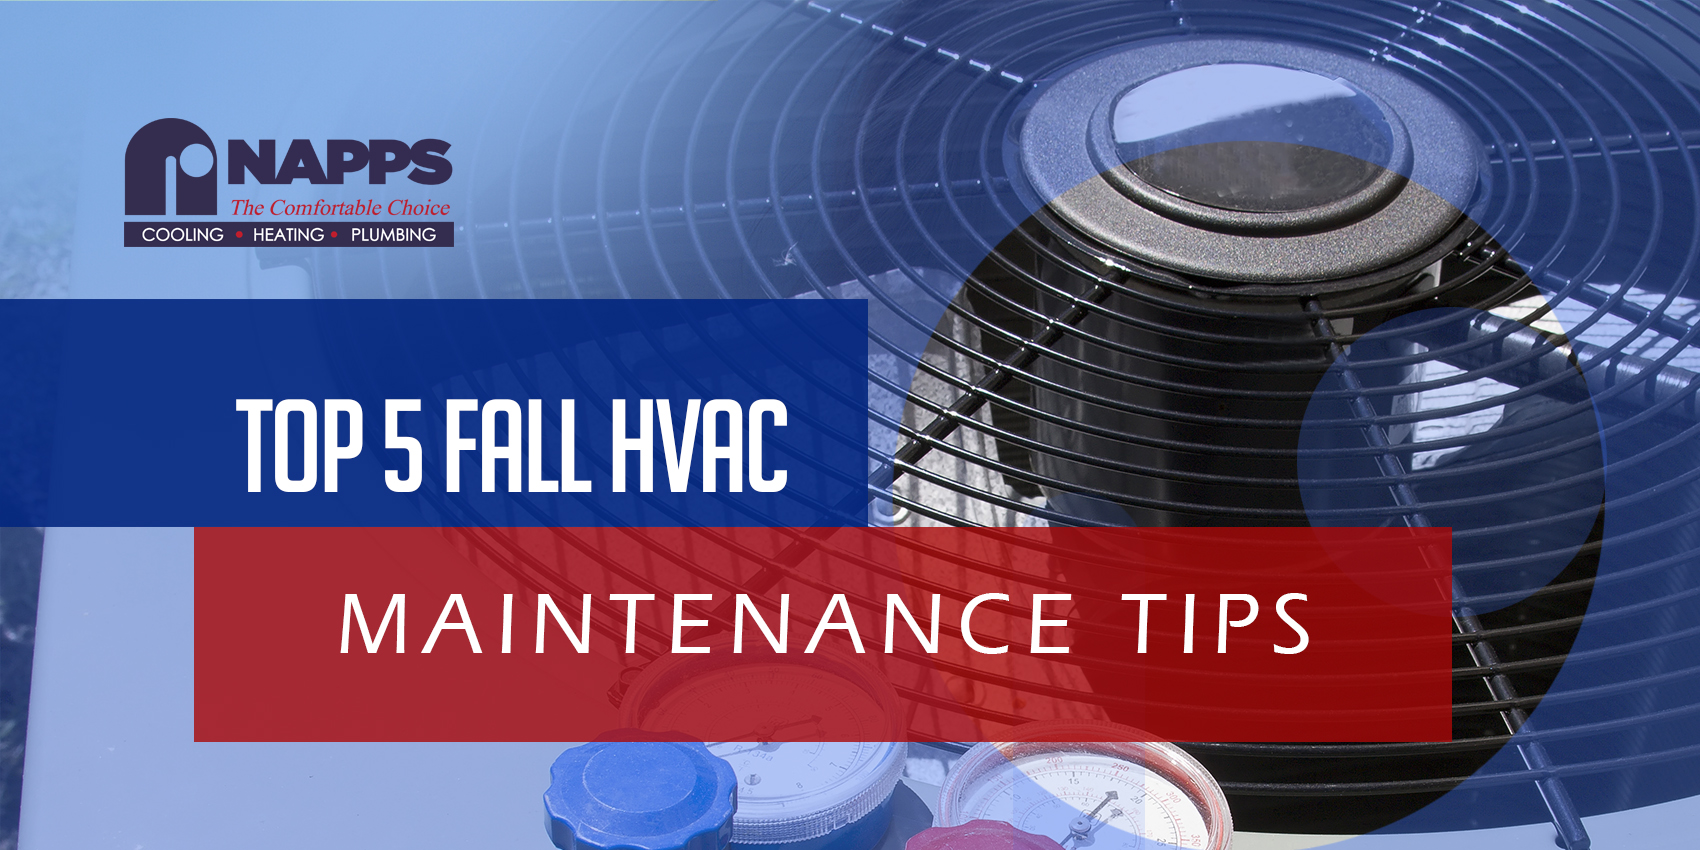  Napps Top 5 Fall HVAC maintenance tips 